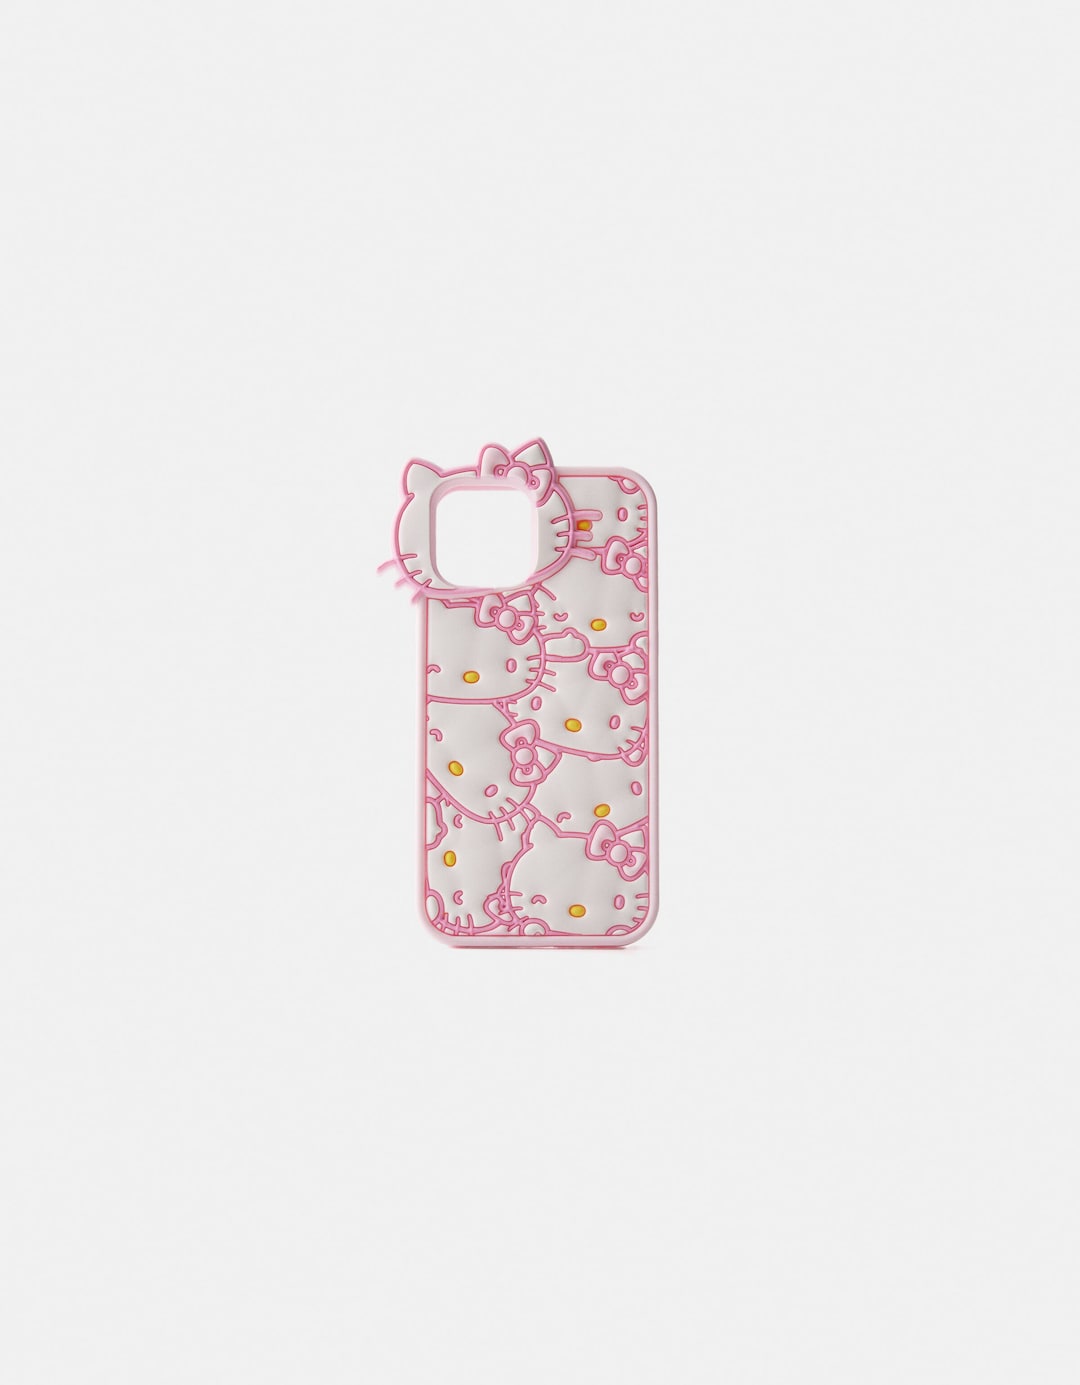 Carcassa mòbil iPhone Hello Kitty